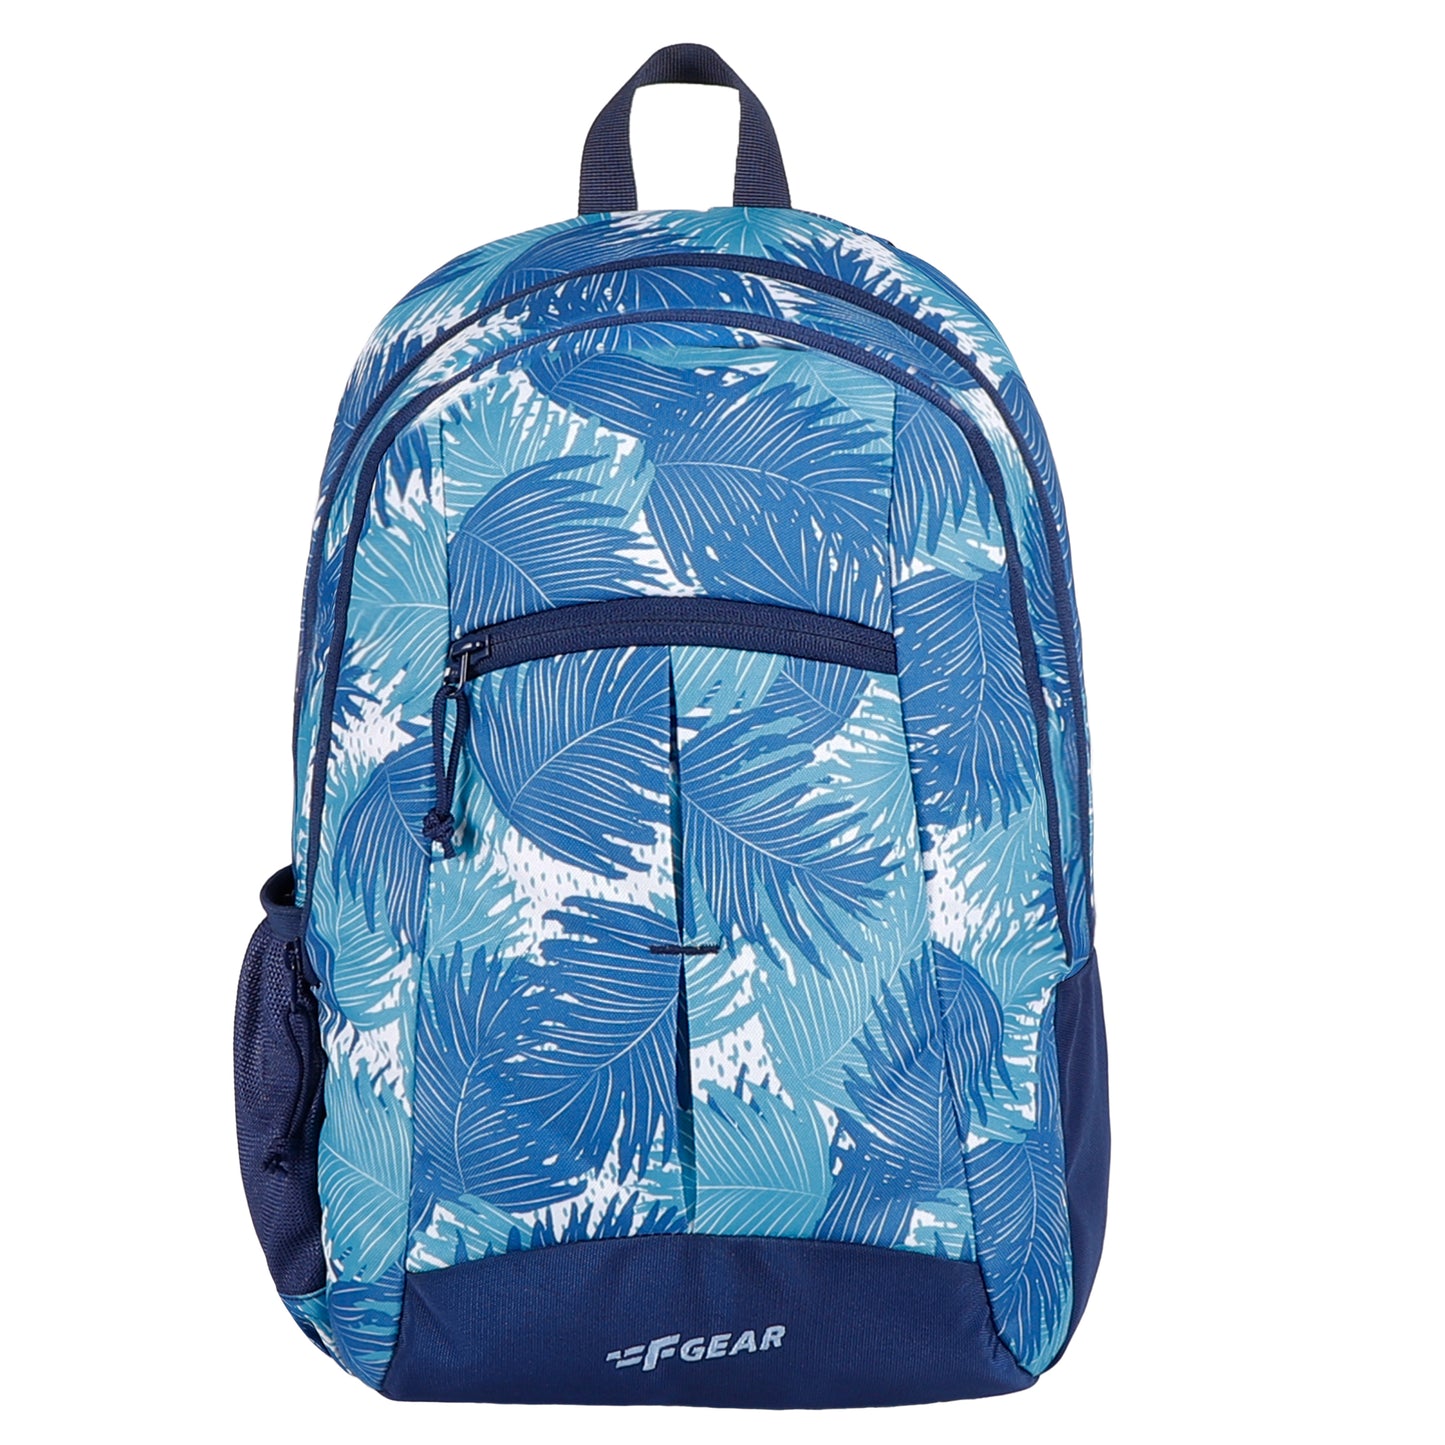 Ellis 17L Ferns Aqua Navy Blue Backpack